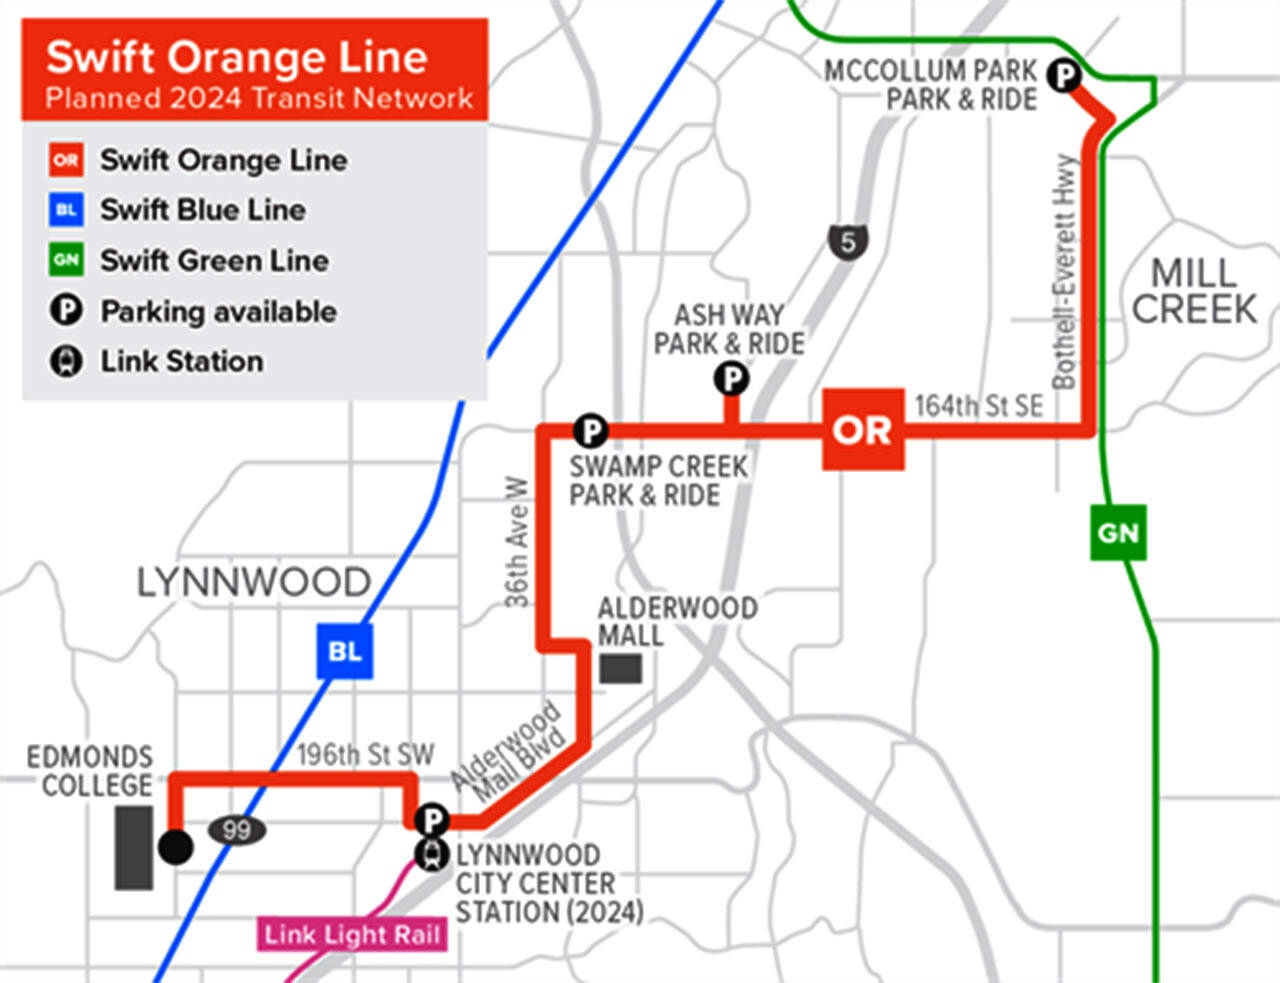 Swift Orange Line planned 2024 route. (Community Transit)